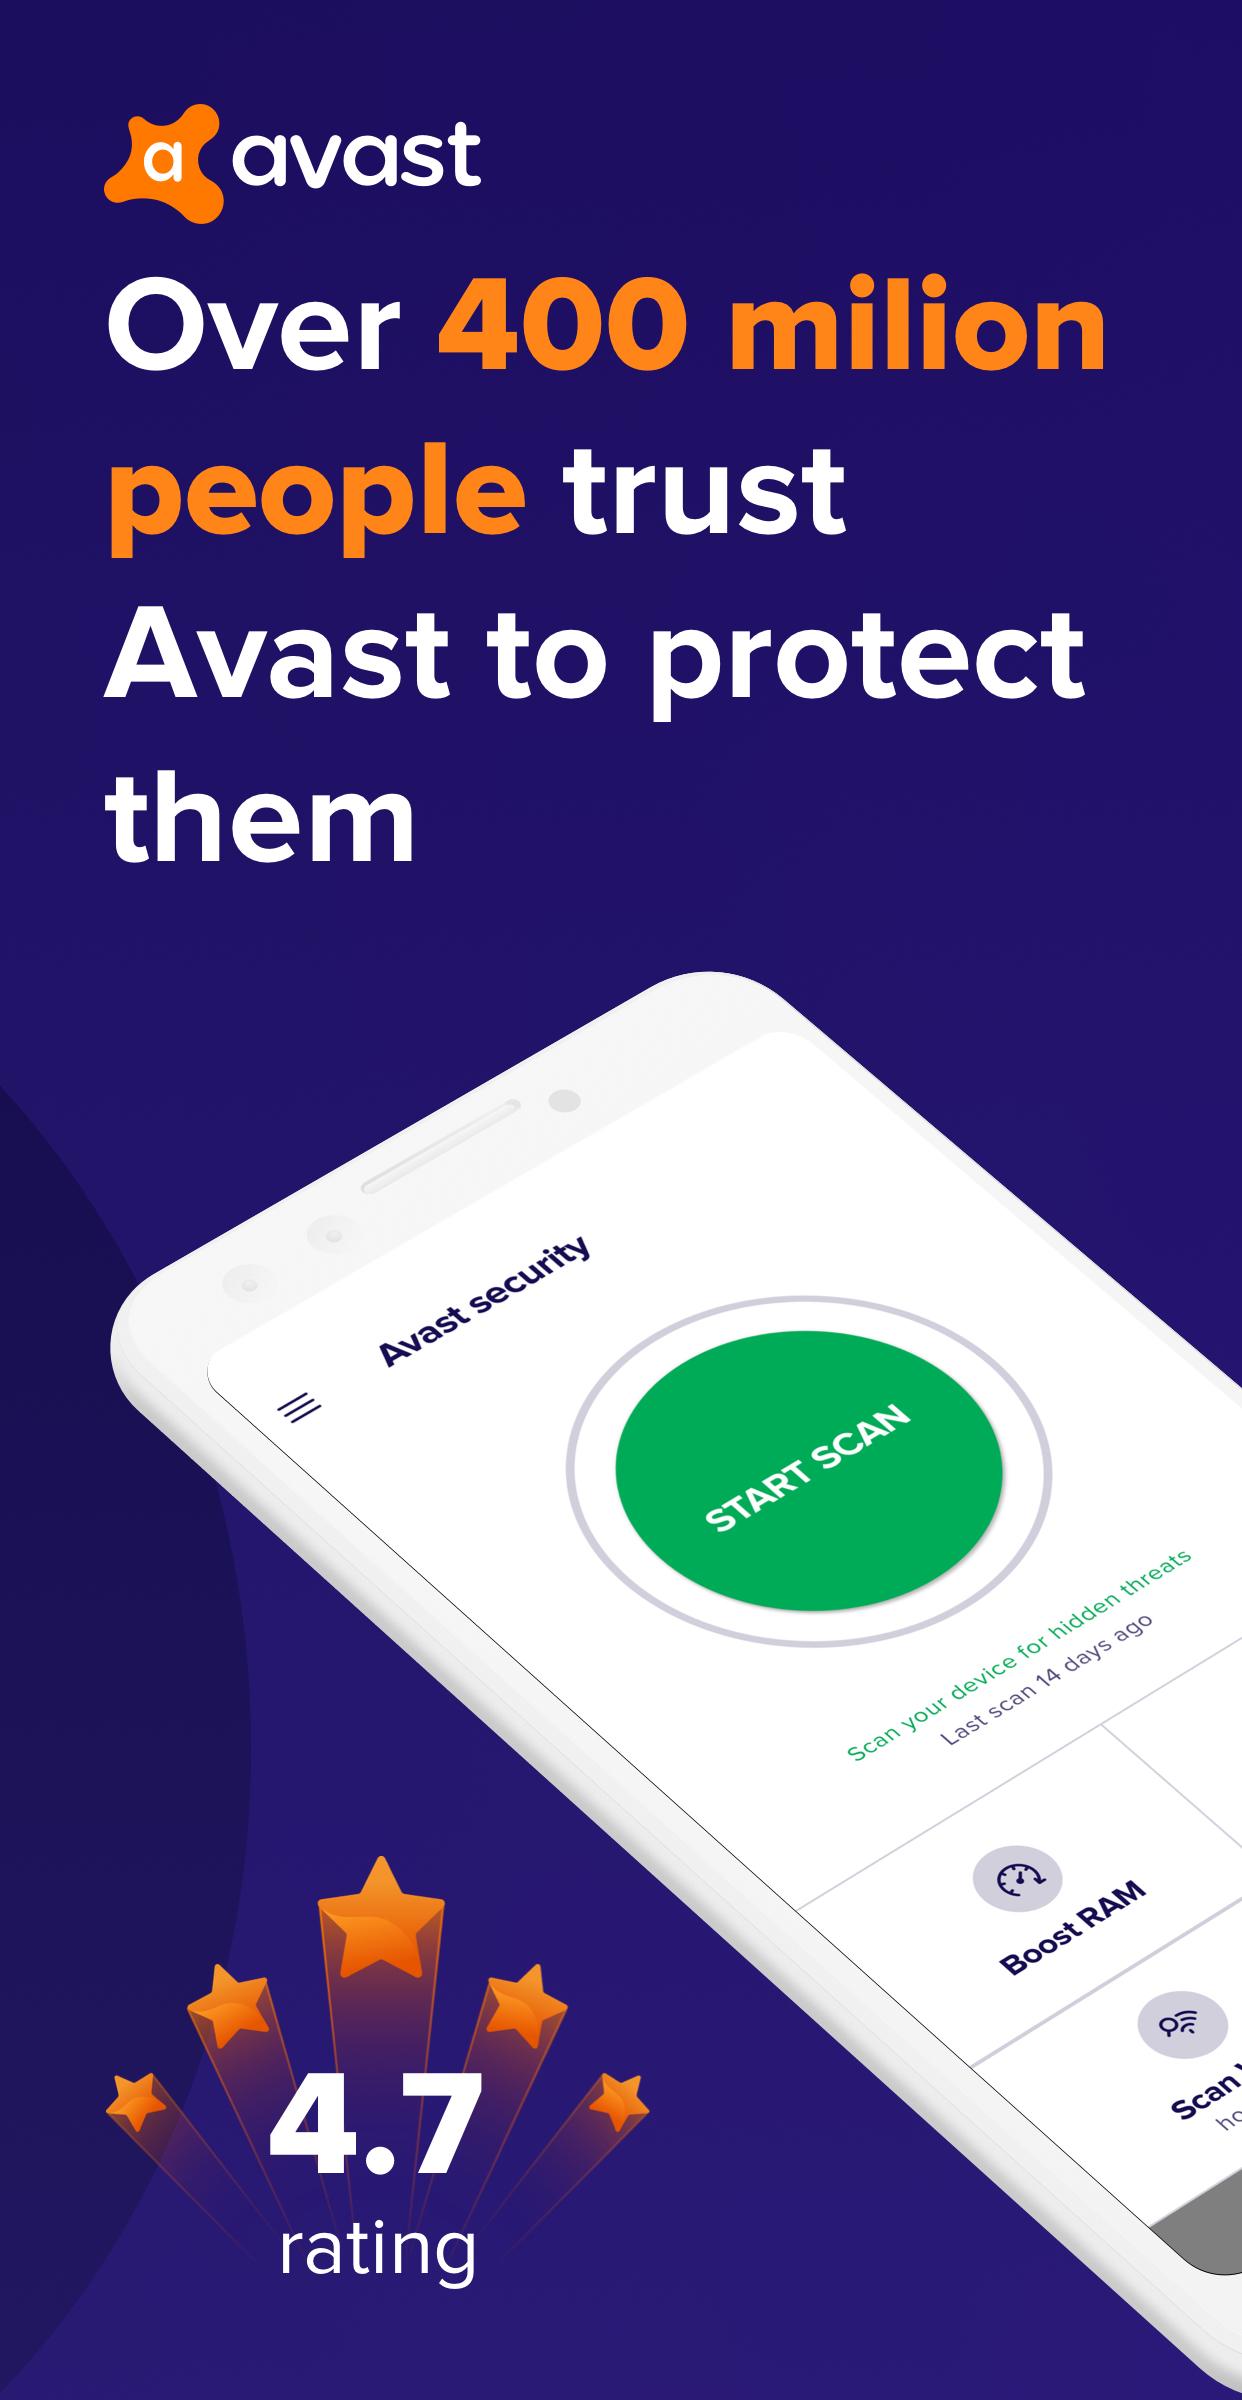 Avast-Mobile-Security-Antivirus